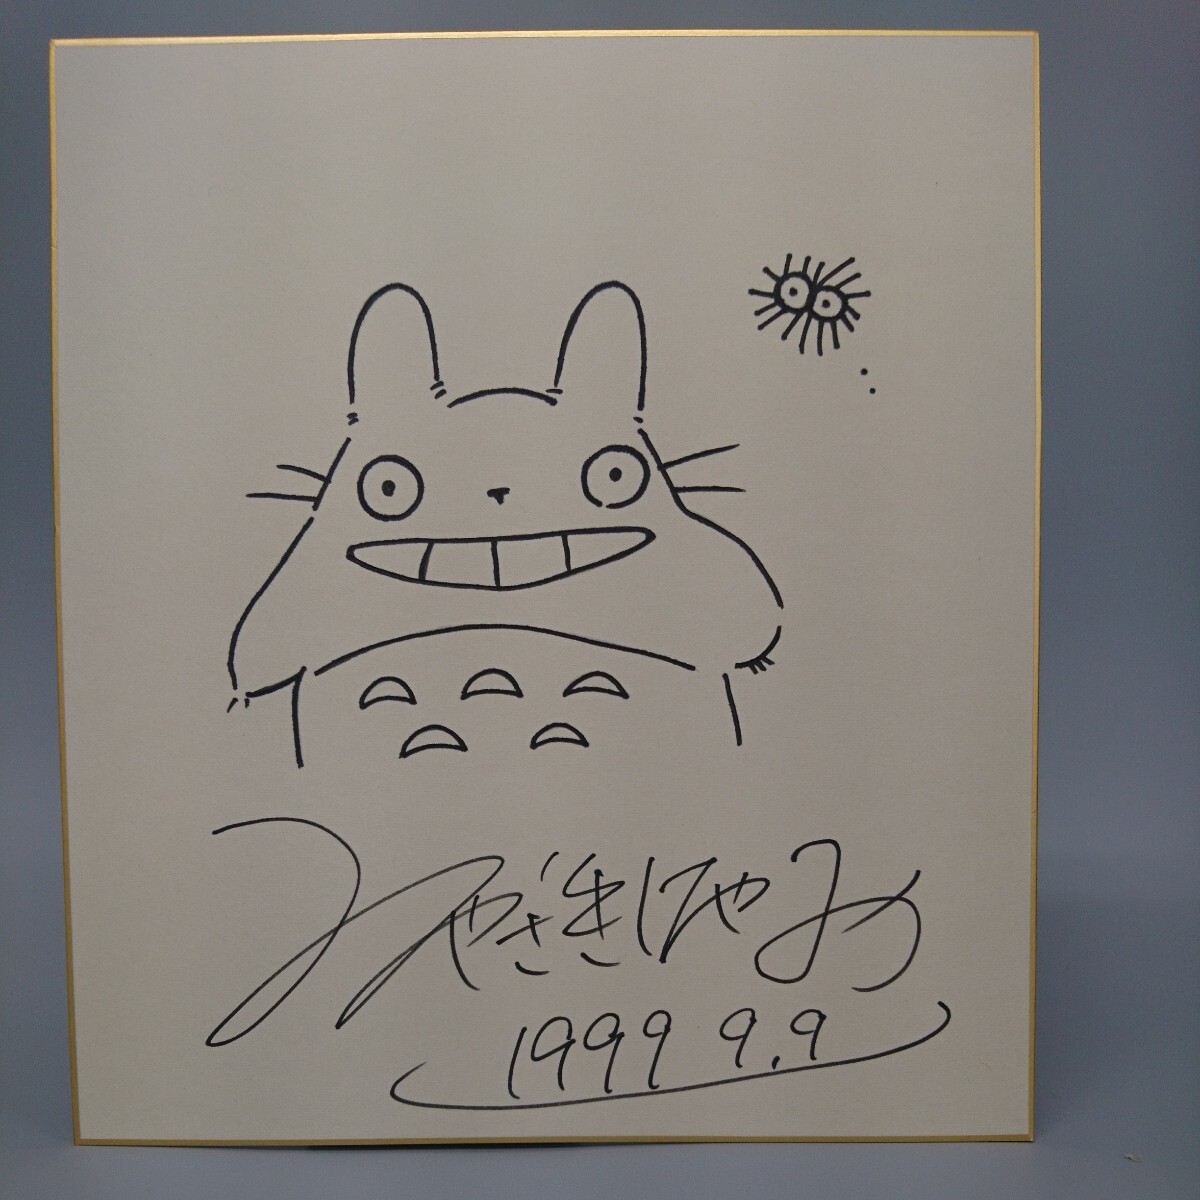 Copy Hayao Miyazaki My Neighbor Totoro Signed Colored Paper, comics, anime goods, sign, Hand-drawn painting